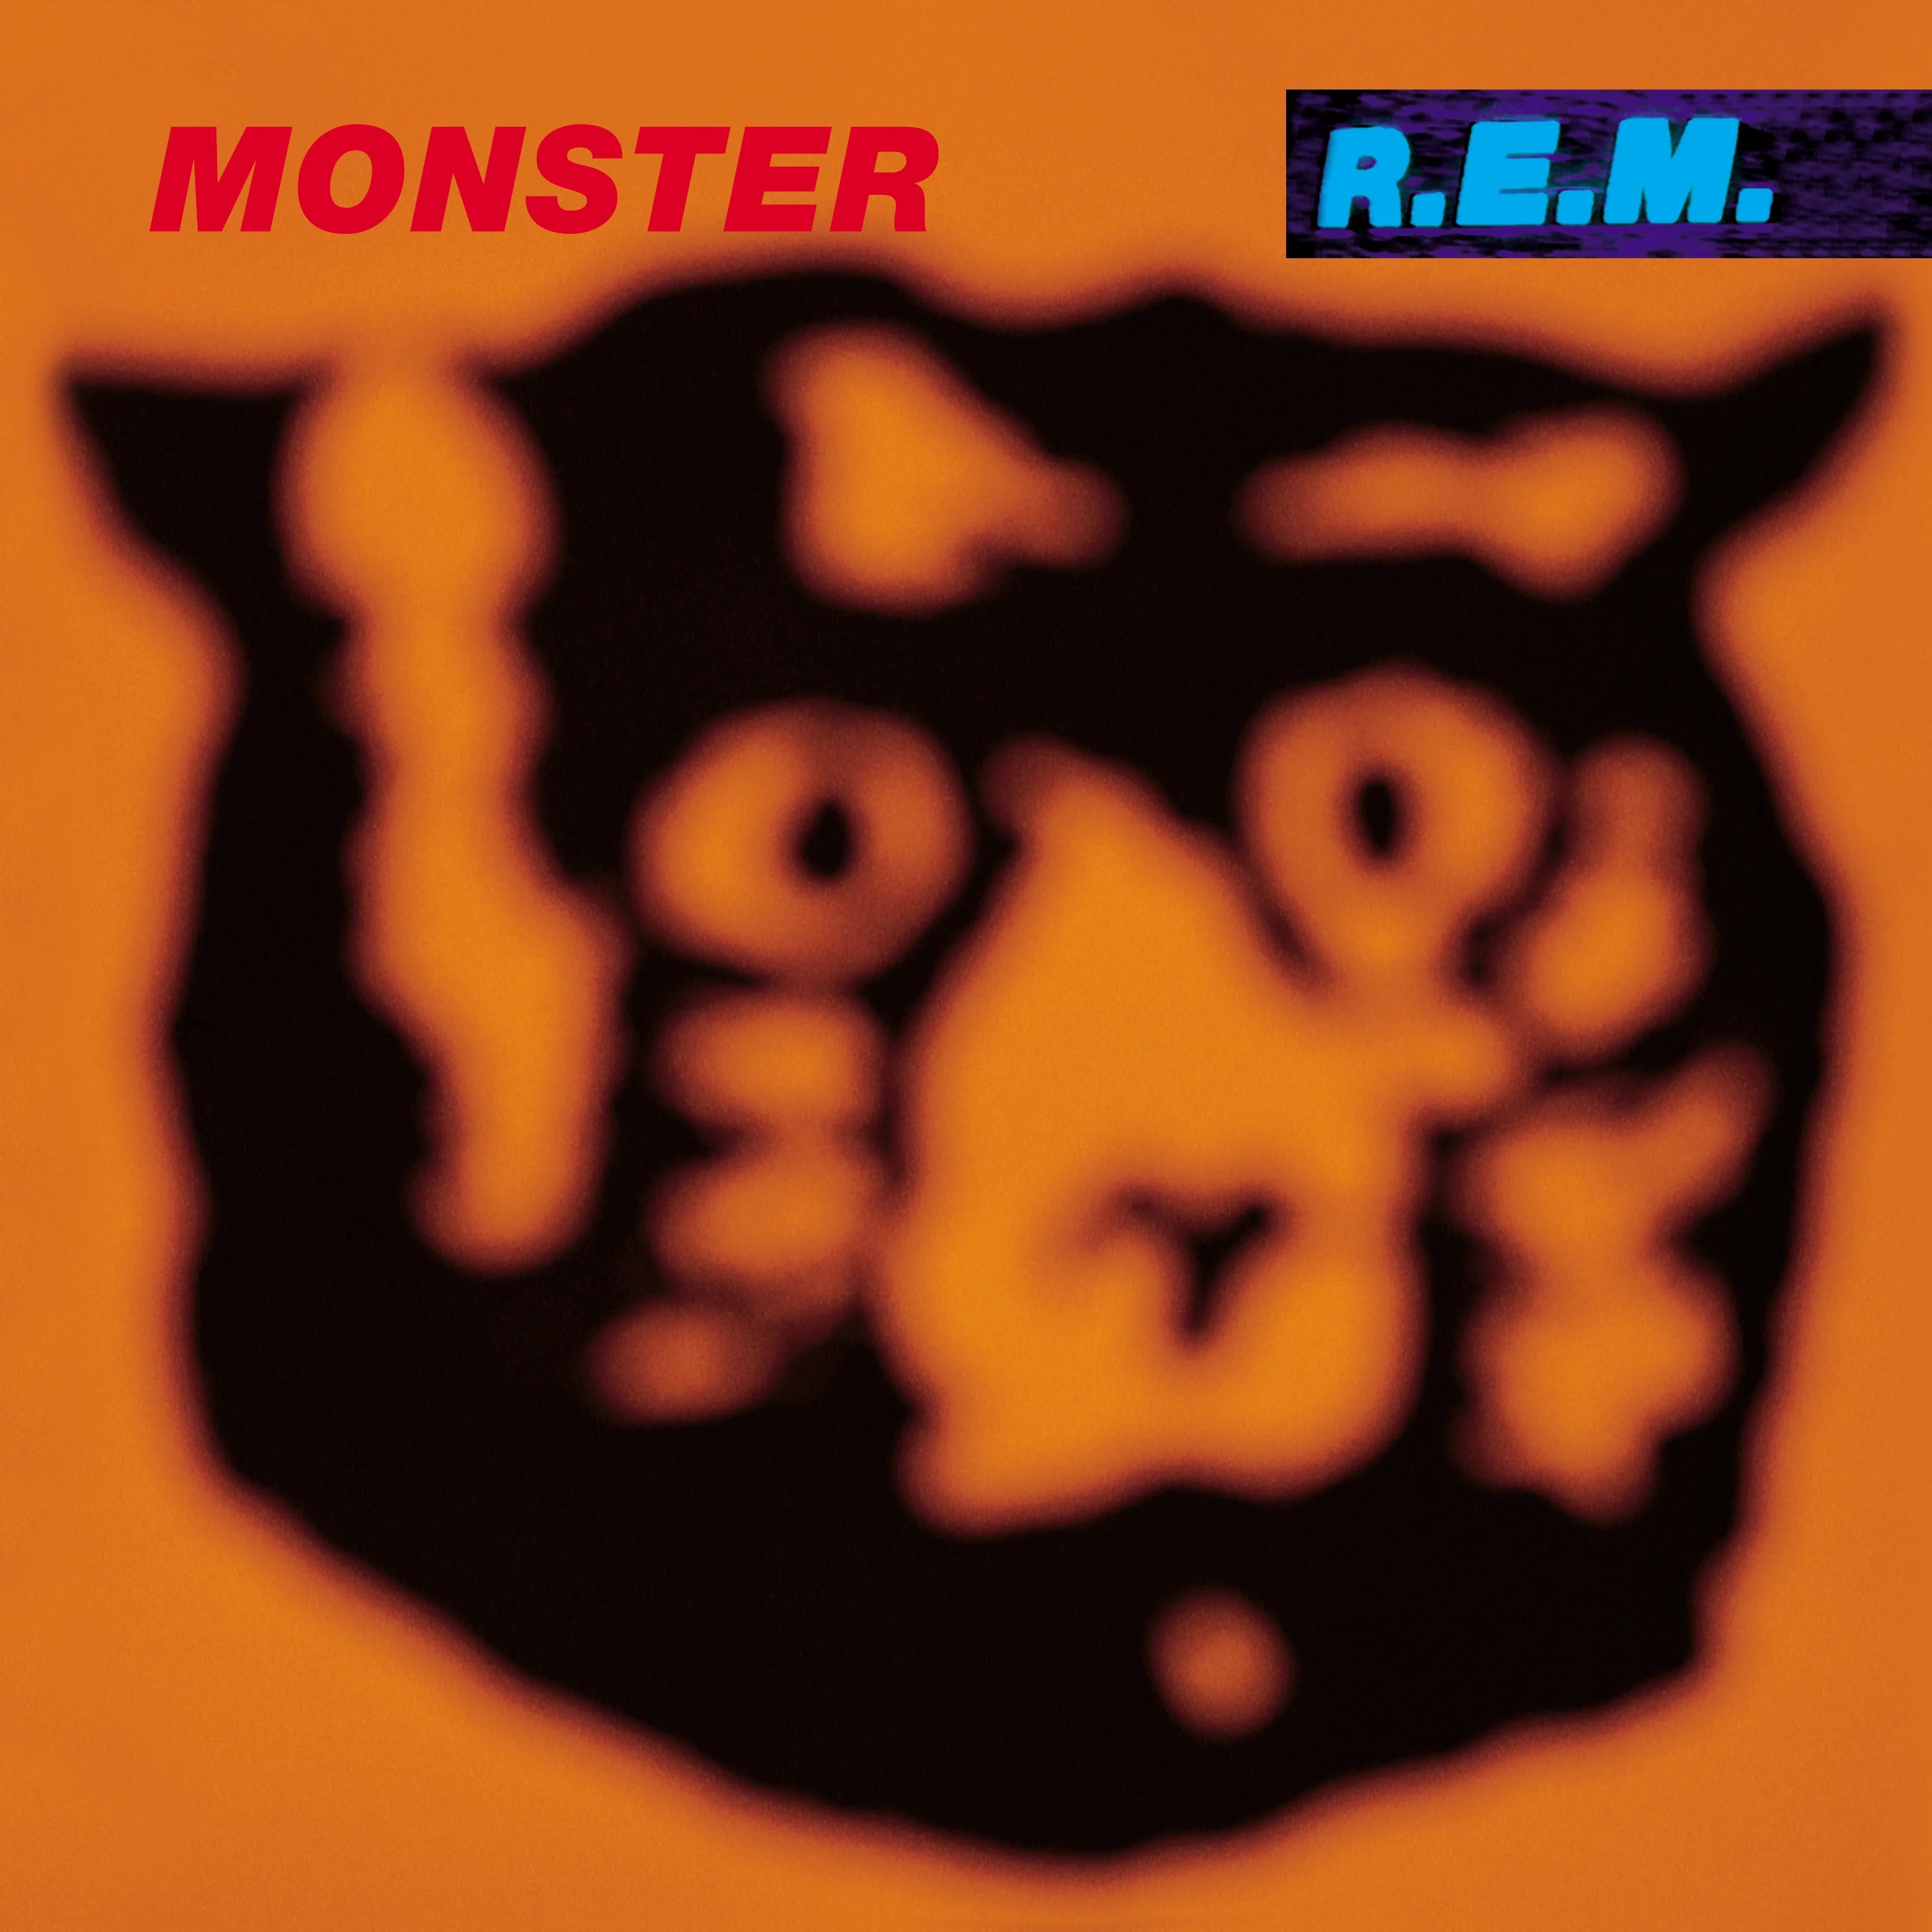 R.E.M. — Let Me In cover artwork